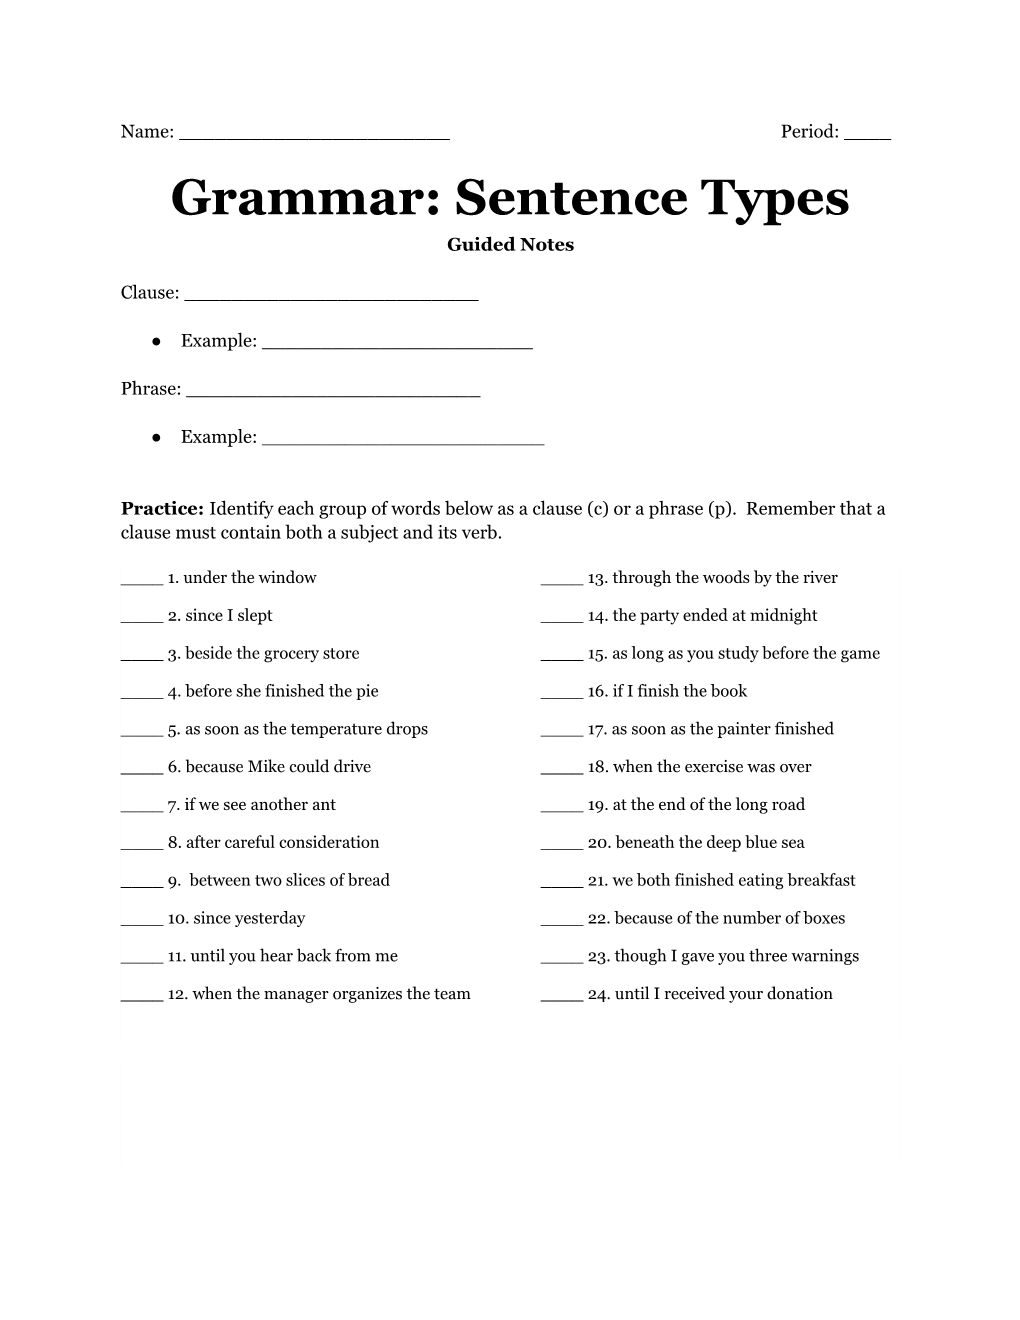 Grammar: Sentence Types